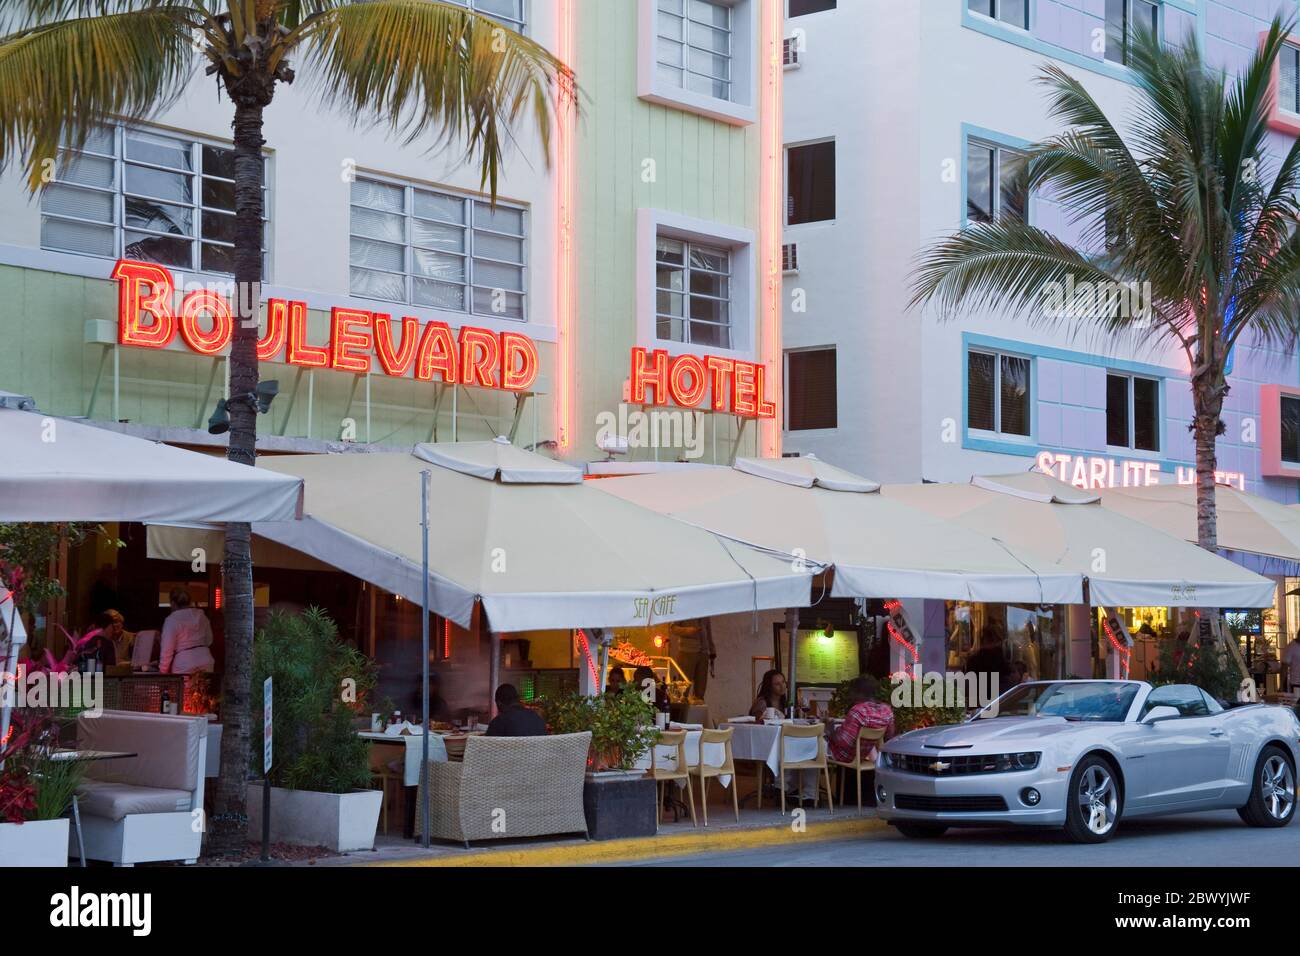 Boulevard Hotel on Ocean Drive, South Beach, City of  Miami Beach, Florida, USA Stock Photo